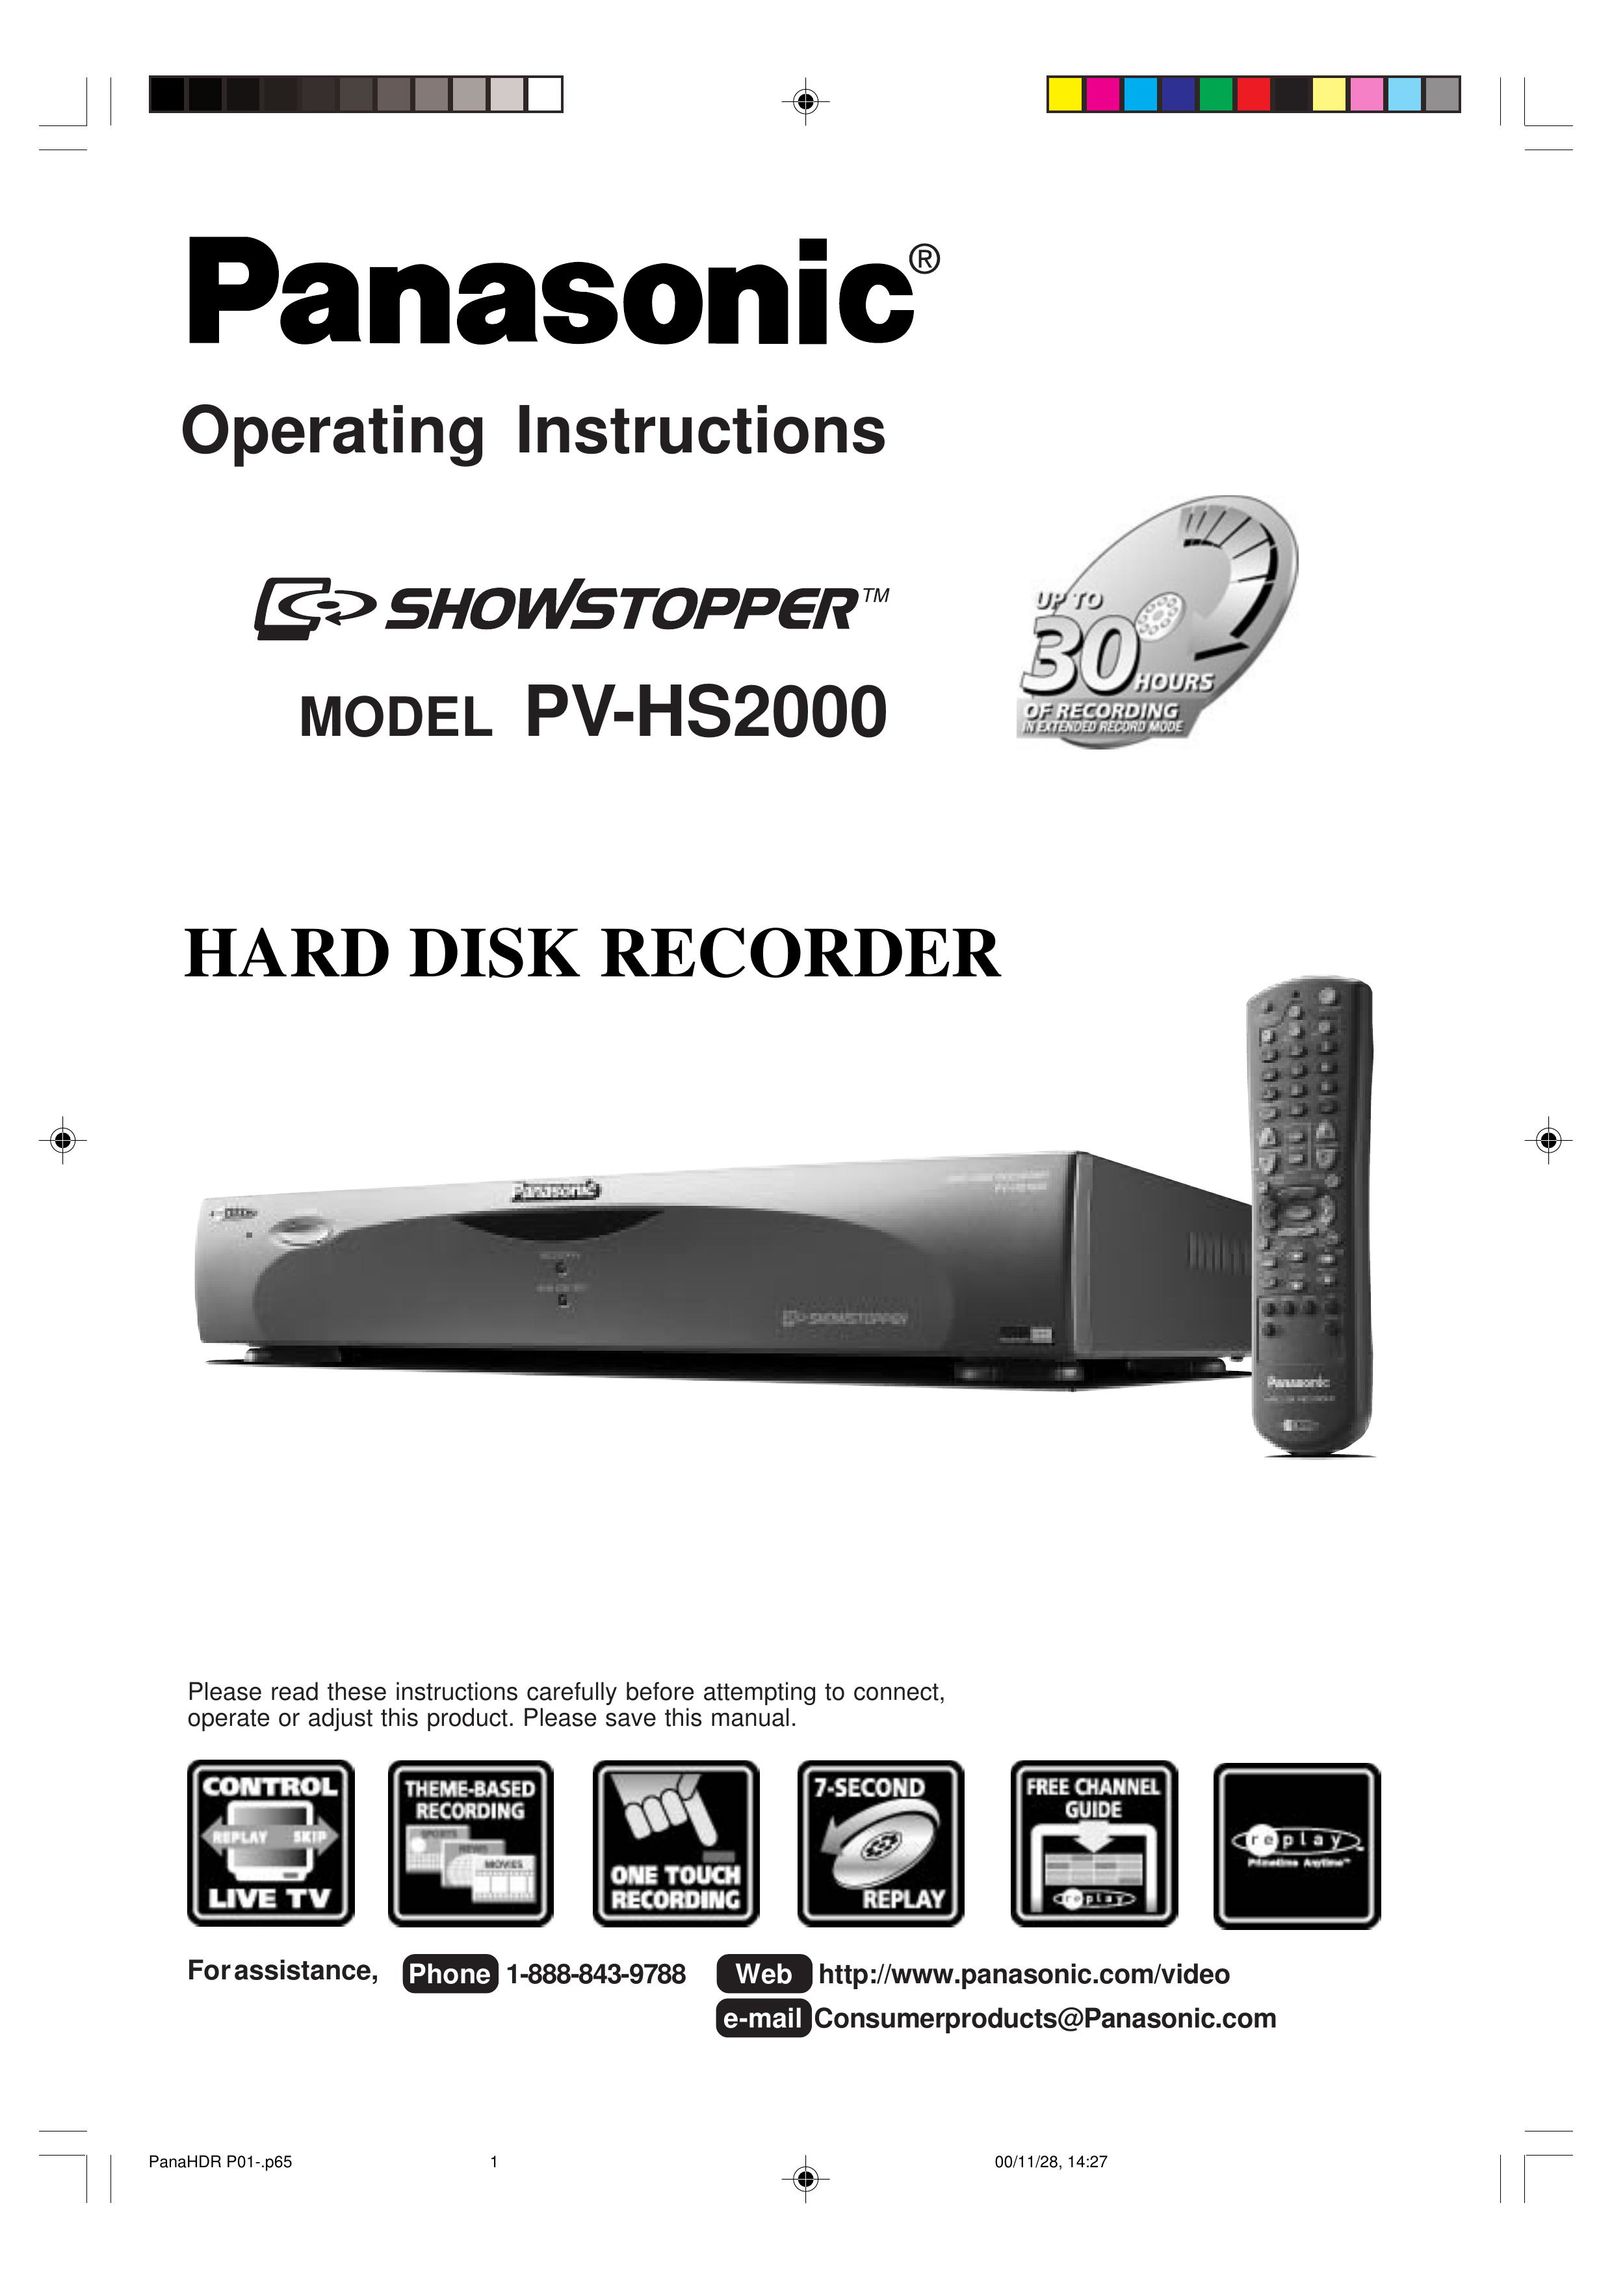 Panasonic PV-HS2000 DVR User Manual